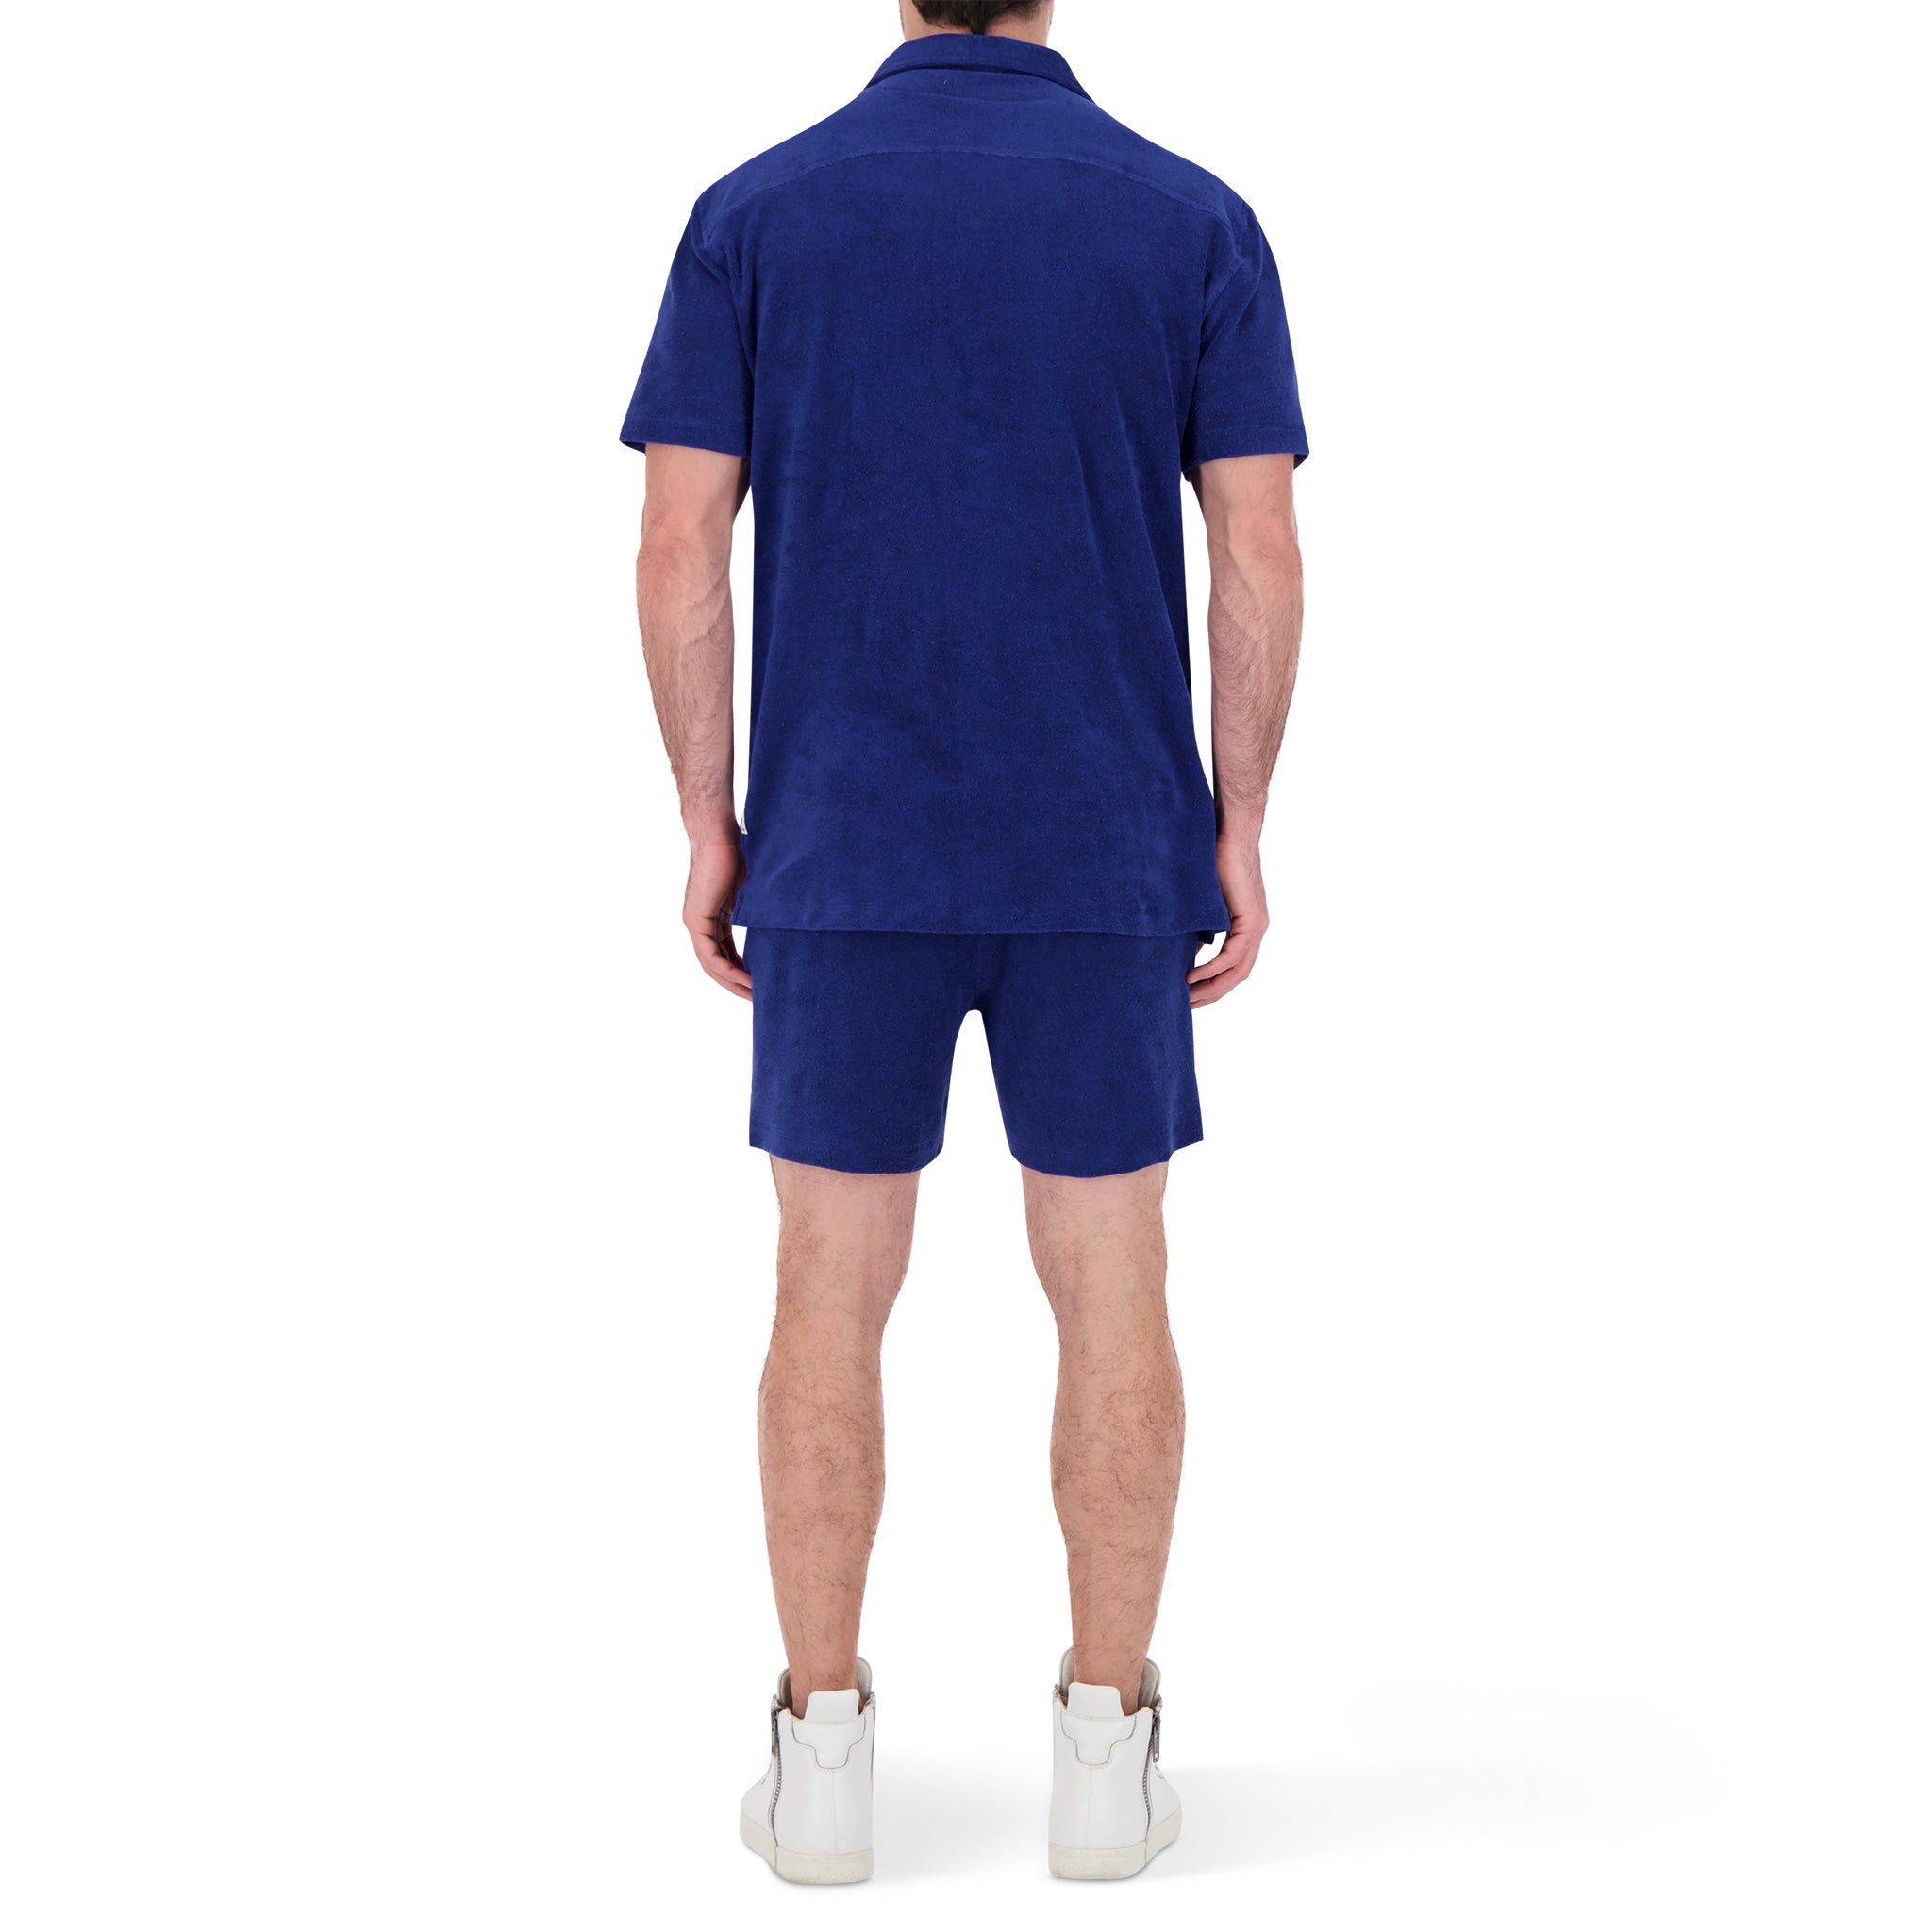 Terry Cloth Knit Shorts in Indigo Blue